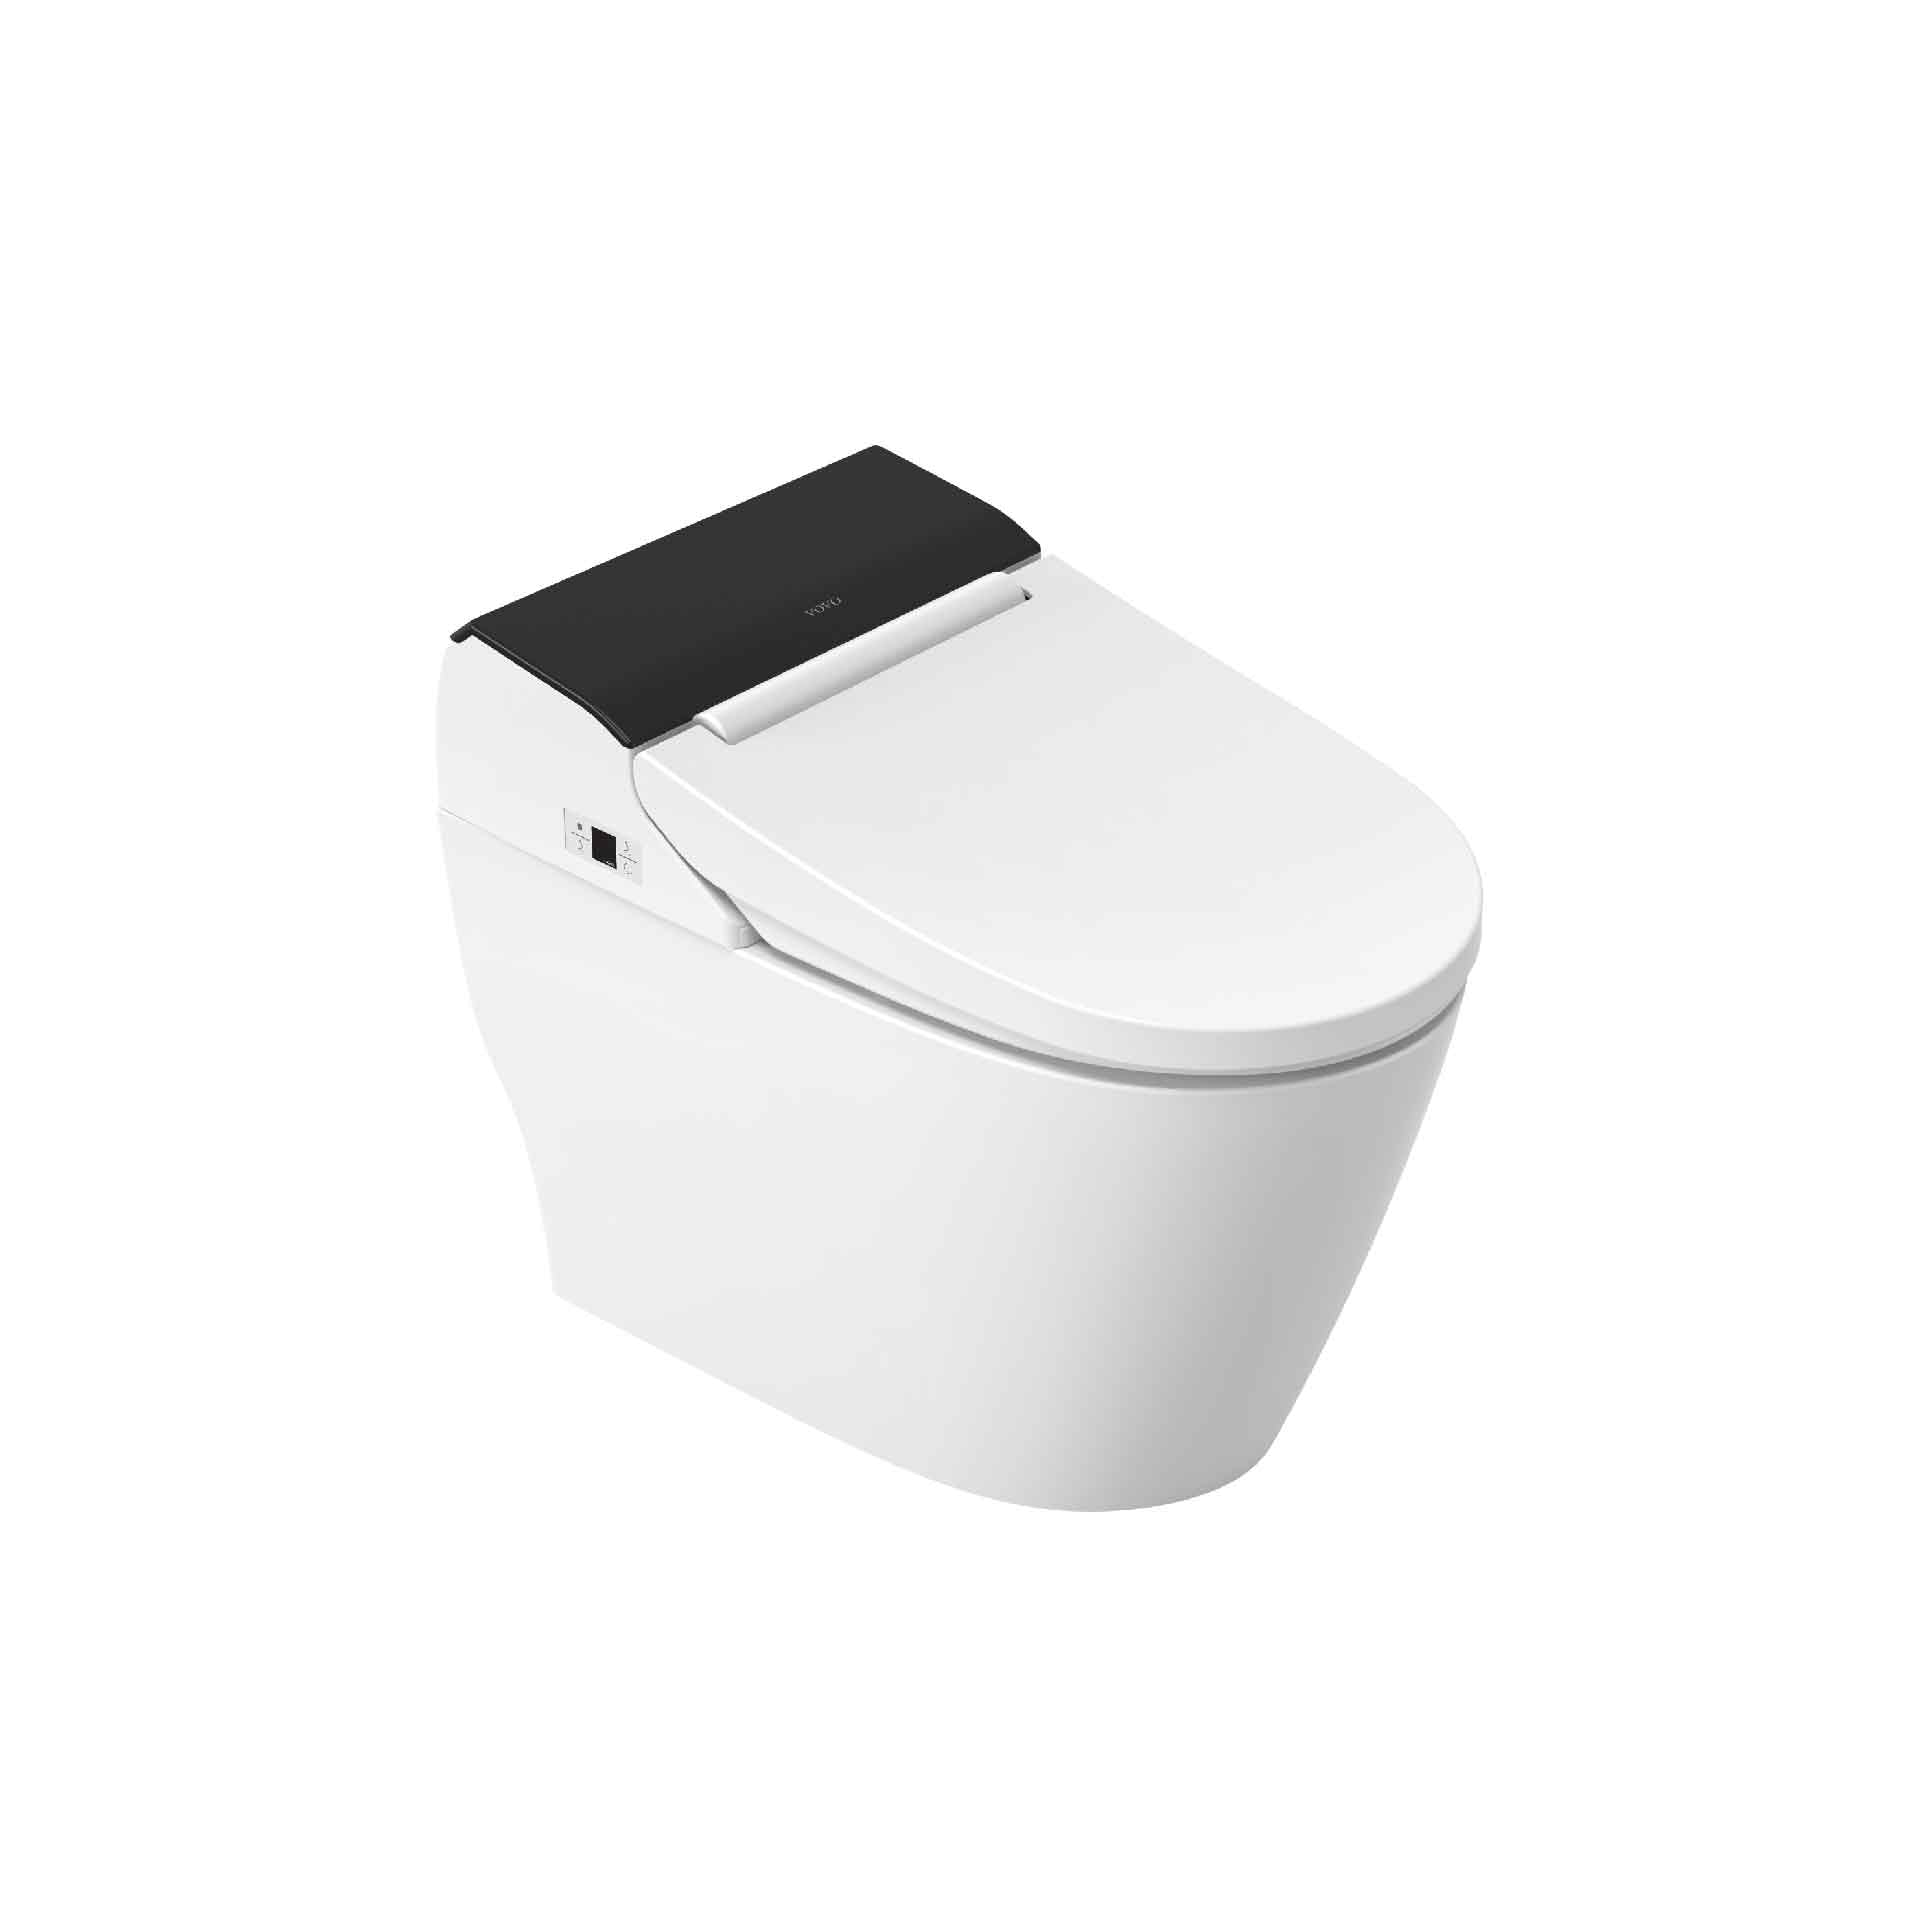 VOVO Bidet Toilet with Auto Flushing TCB-8100B